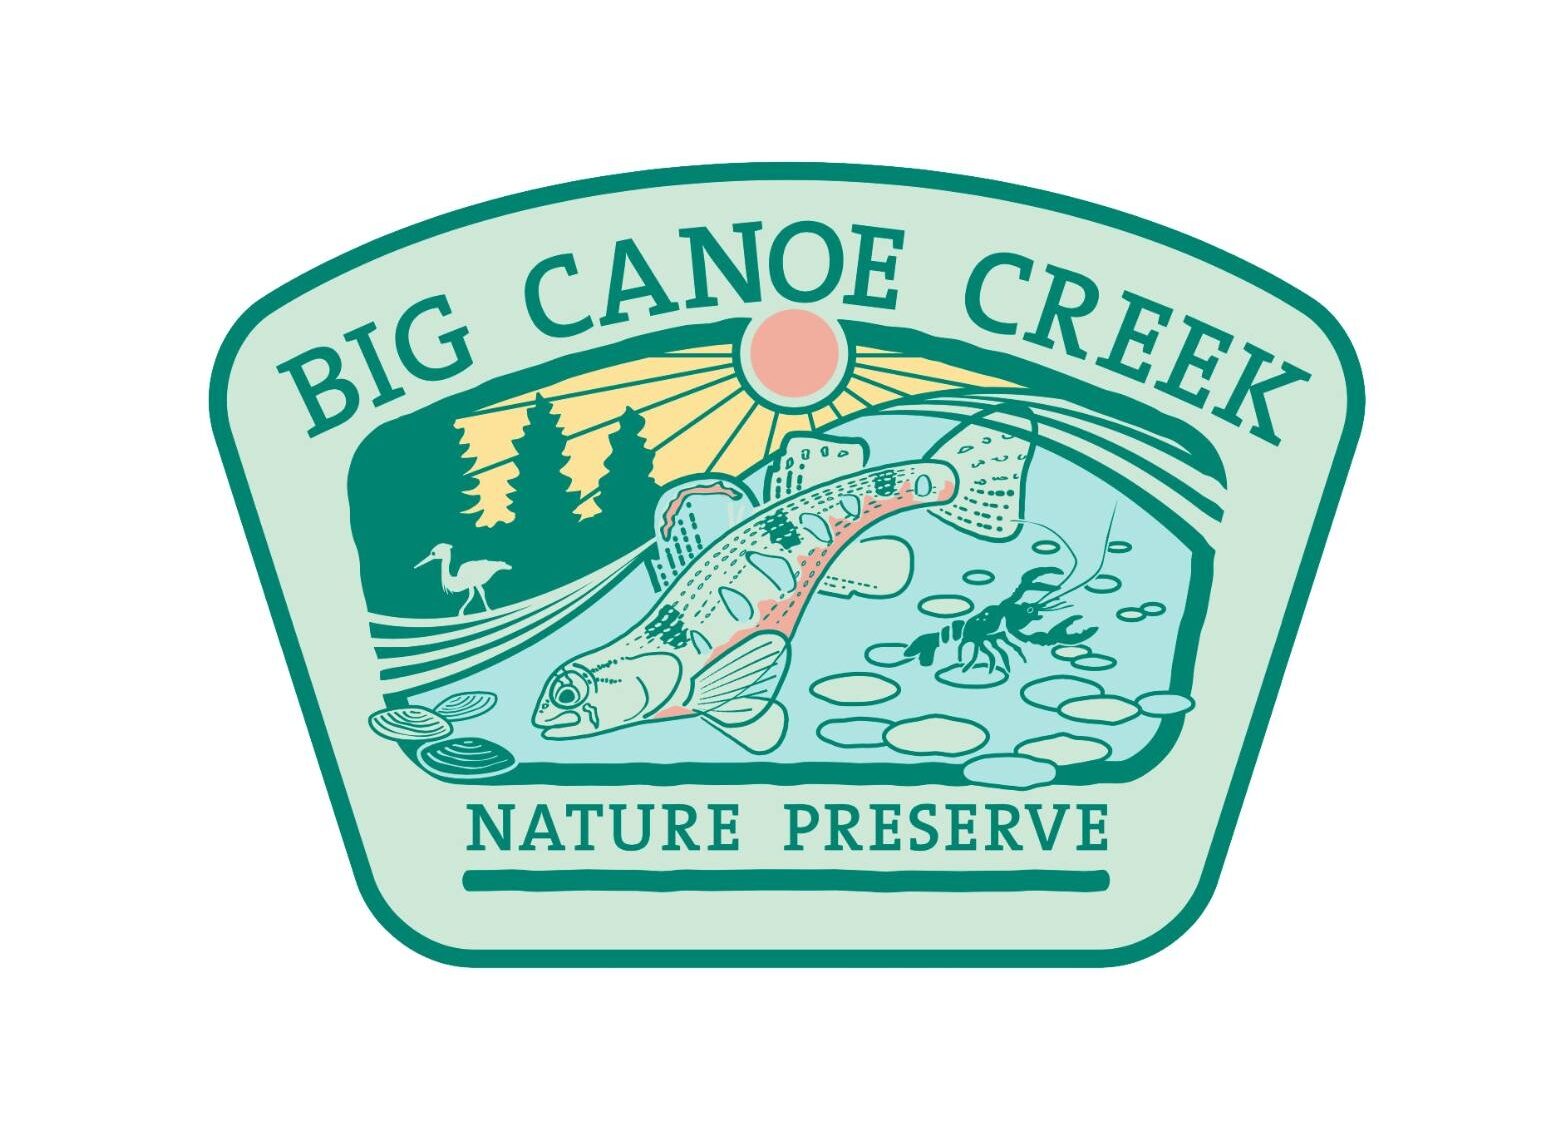 Big Canoe Creek Nature Preserve